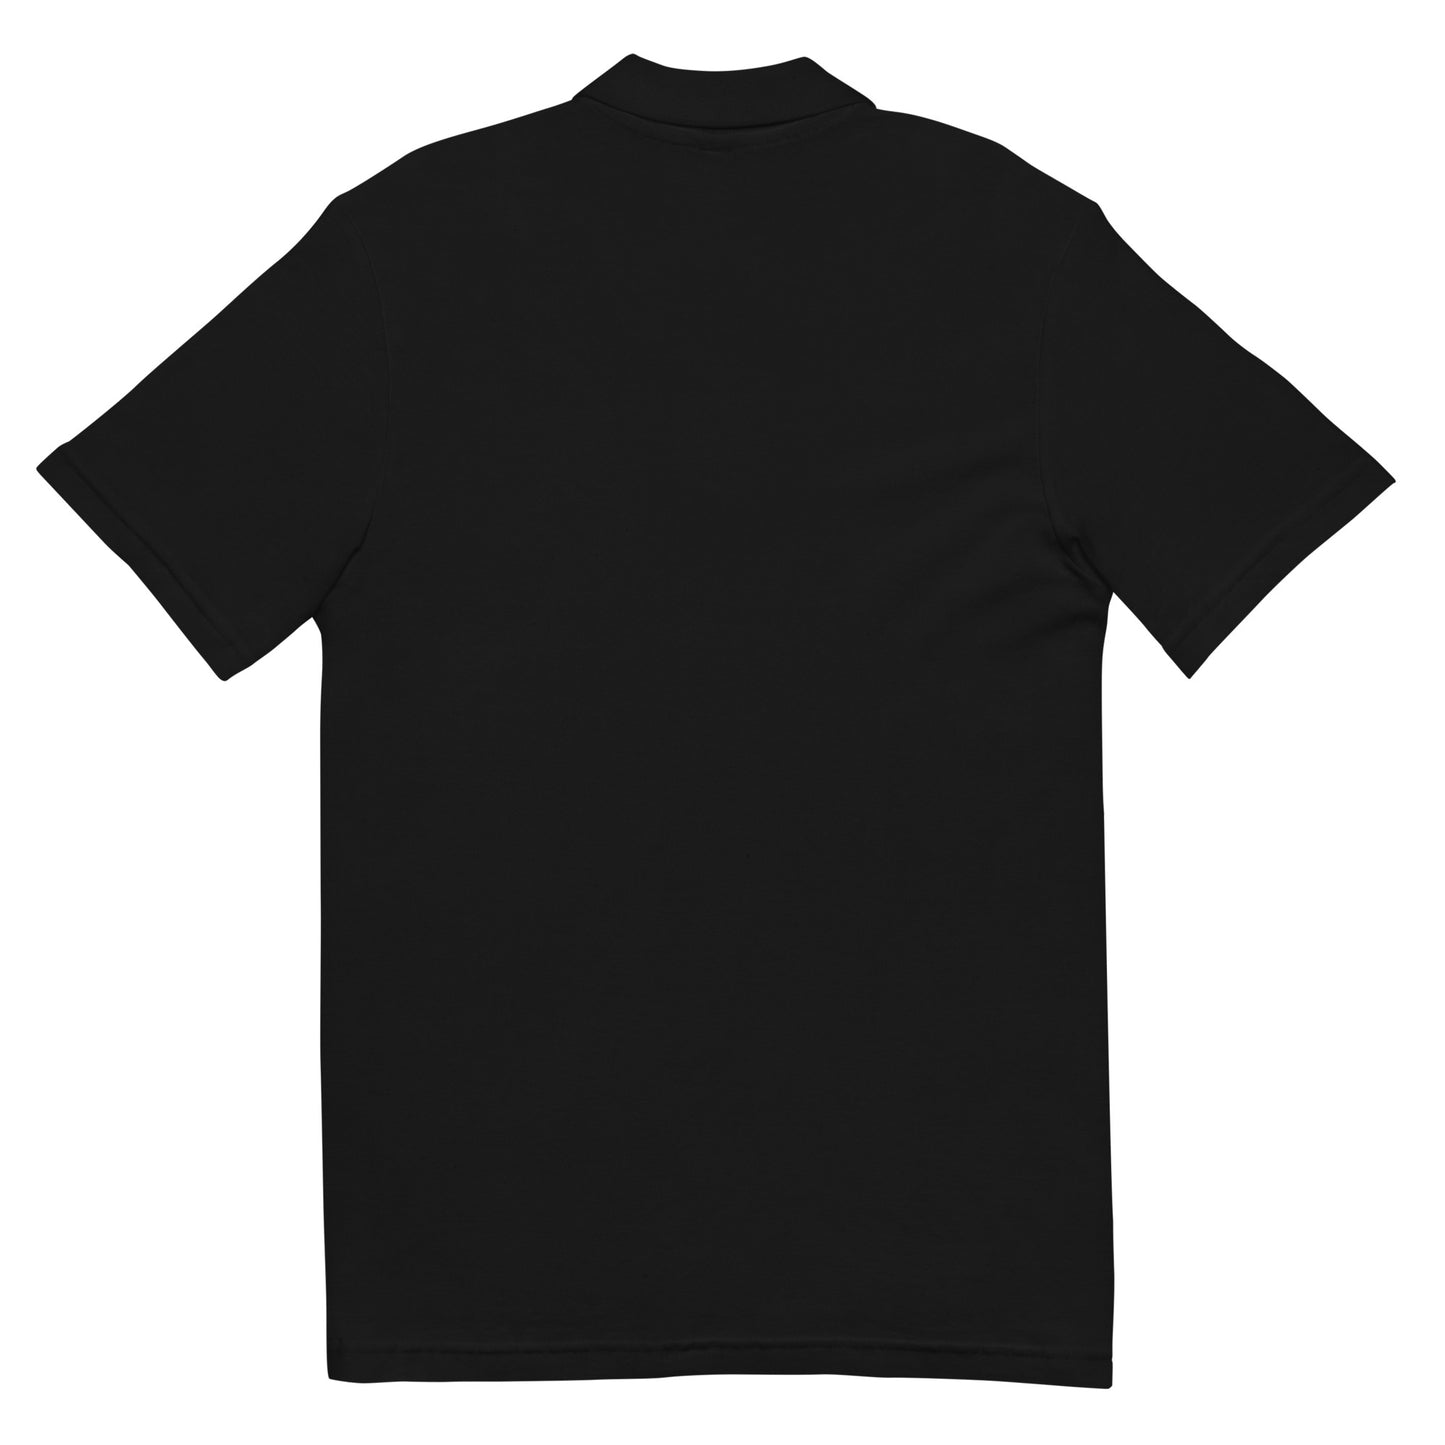 Robb Industrial Corporation pique polo shirt (black)